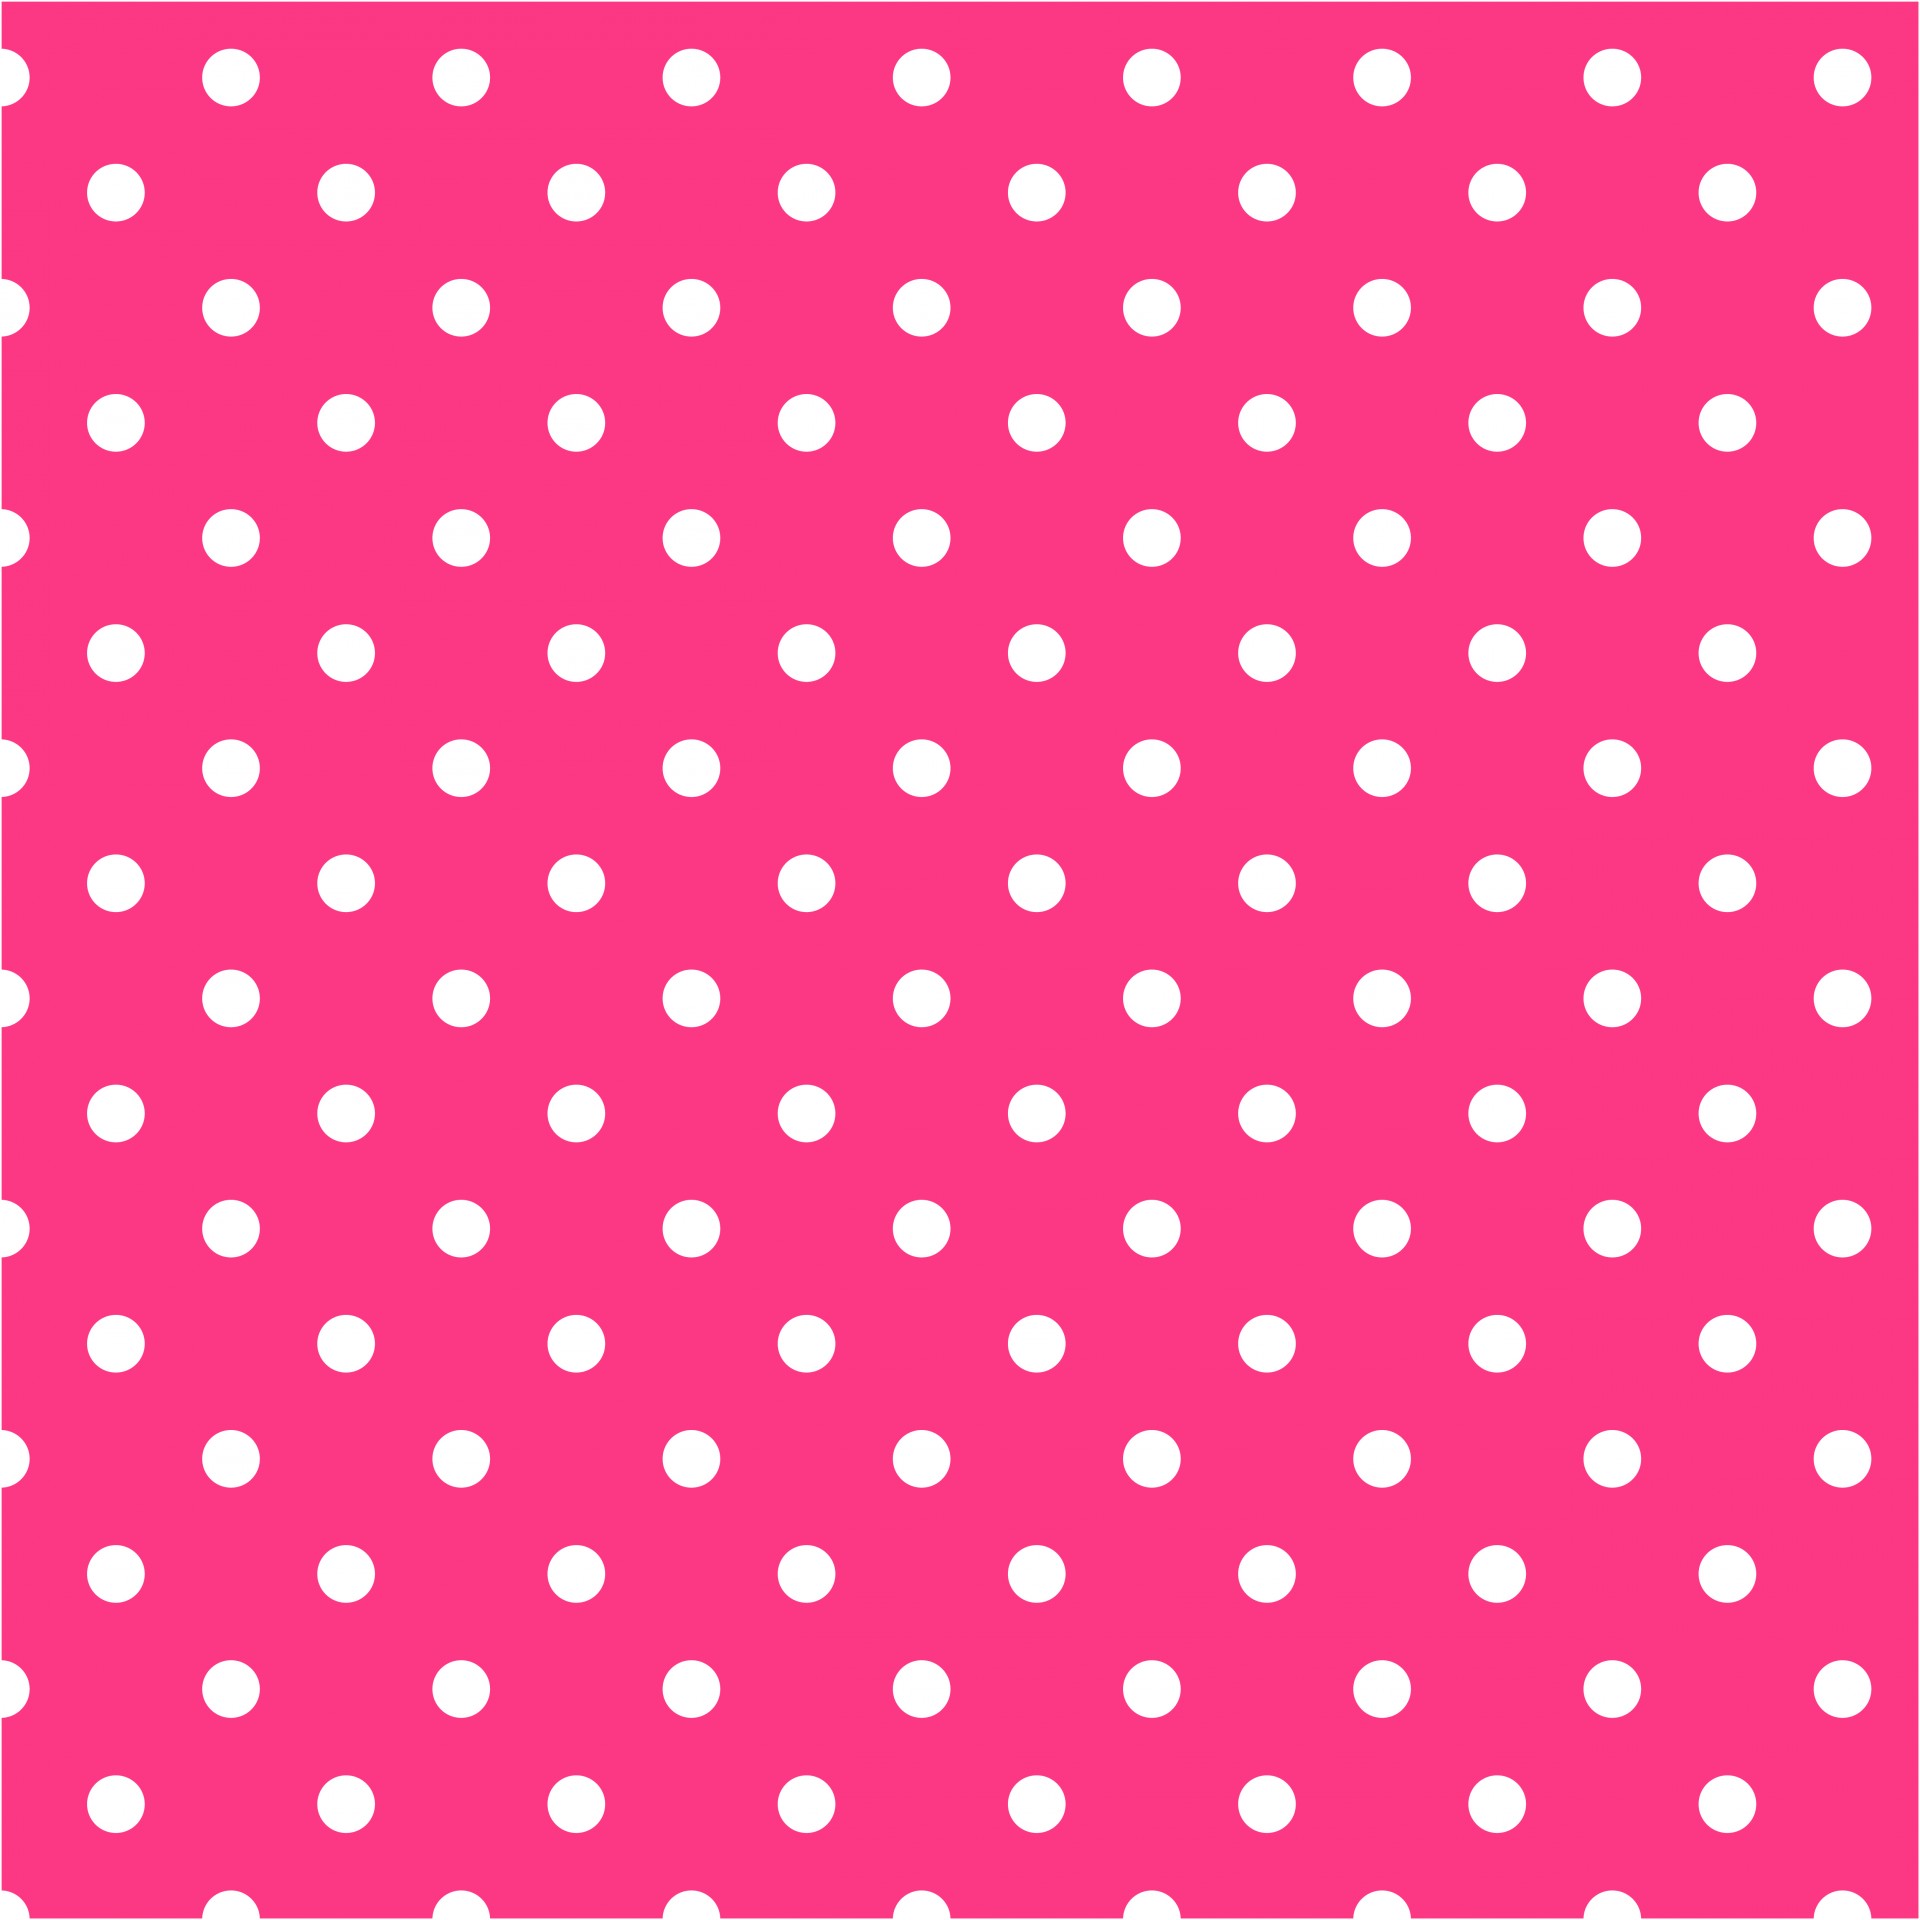 Hot Pink Polka Dot Background Free Stock Photo - Public Domain ...